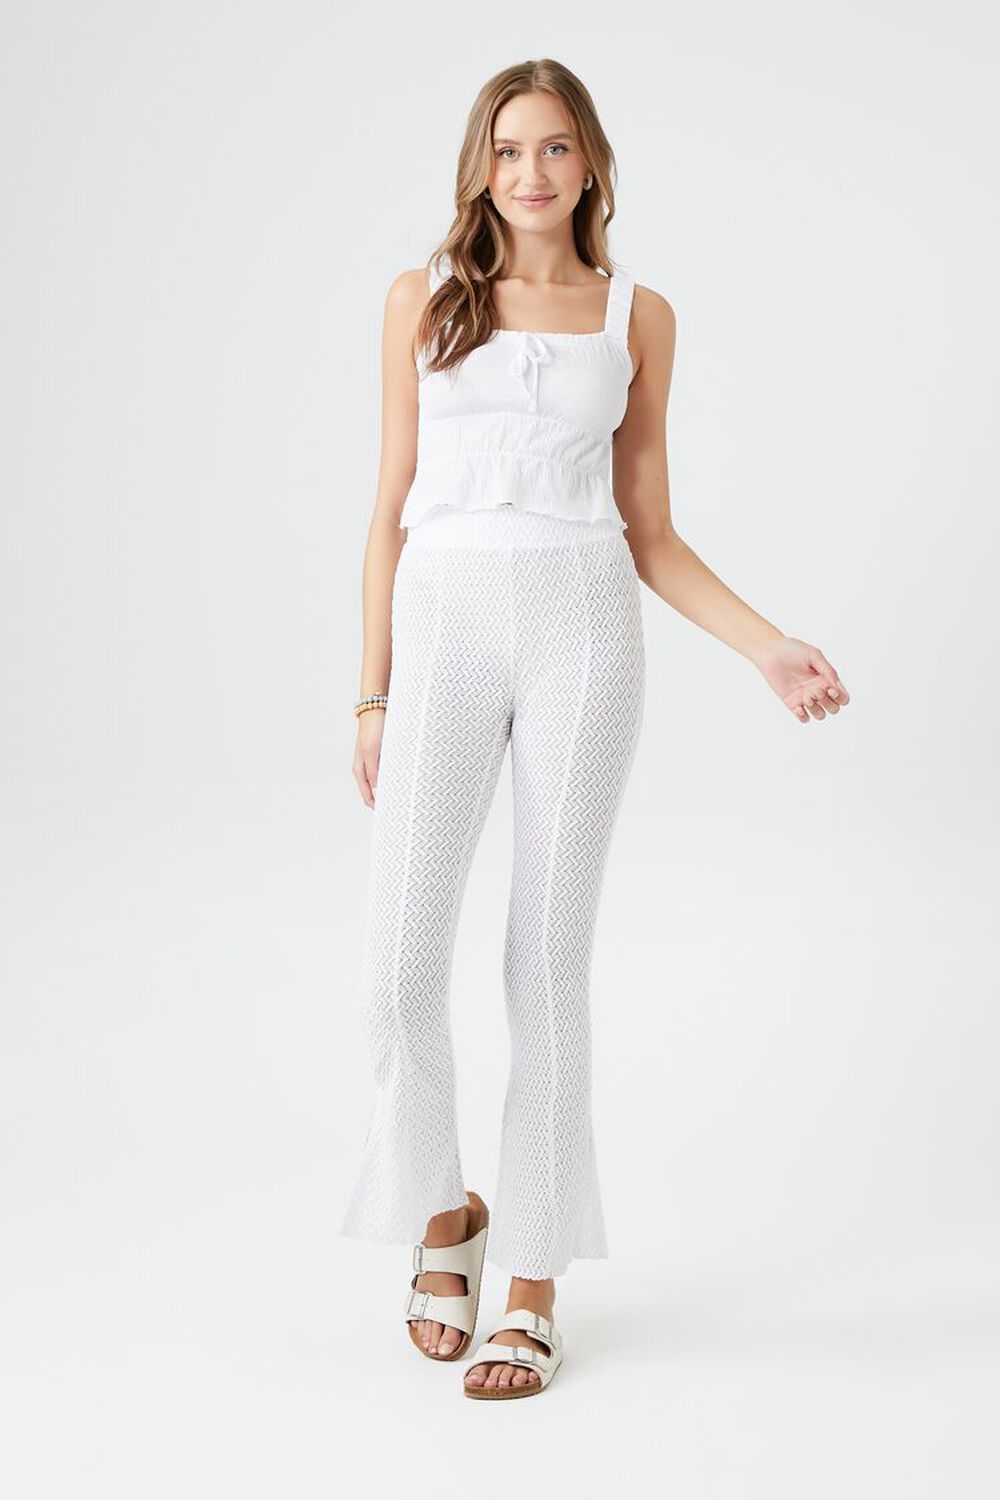 WHITE Crochet Flare Pants, image 1